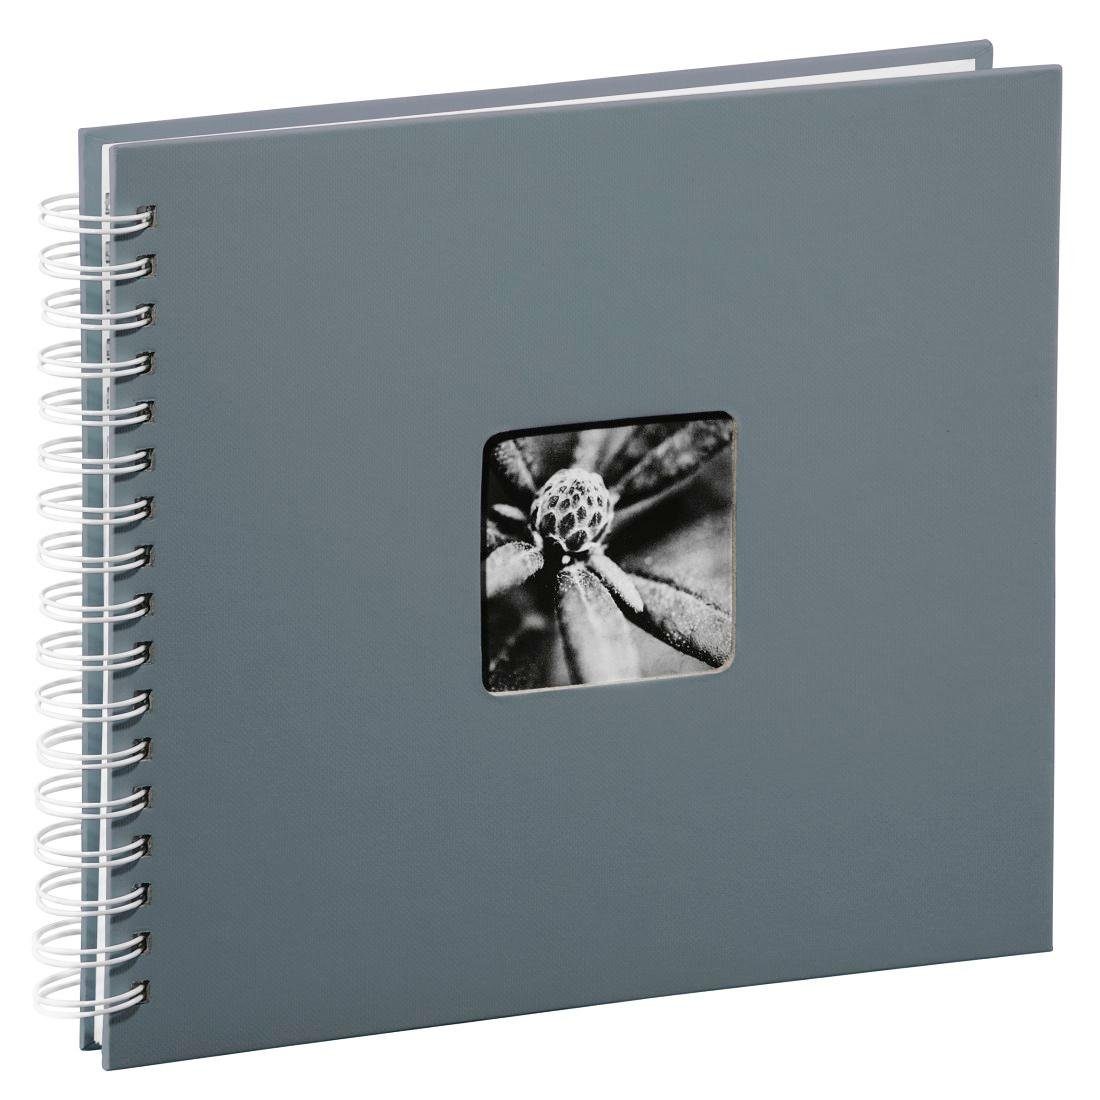 Hama Fotoalbum Spiralalbum 28 24 cm, 50 Seiten, grau x weiße Fotoalbum